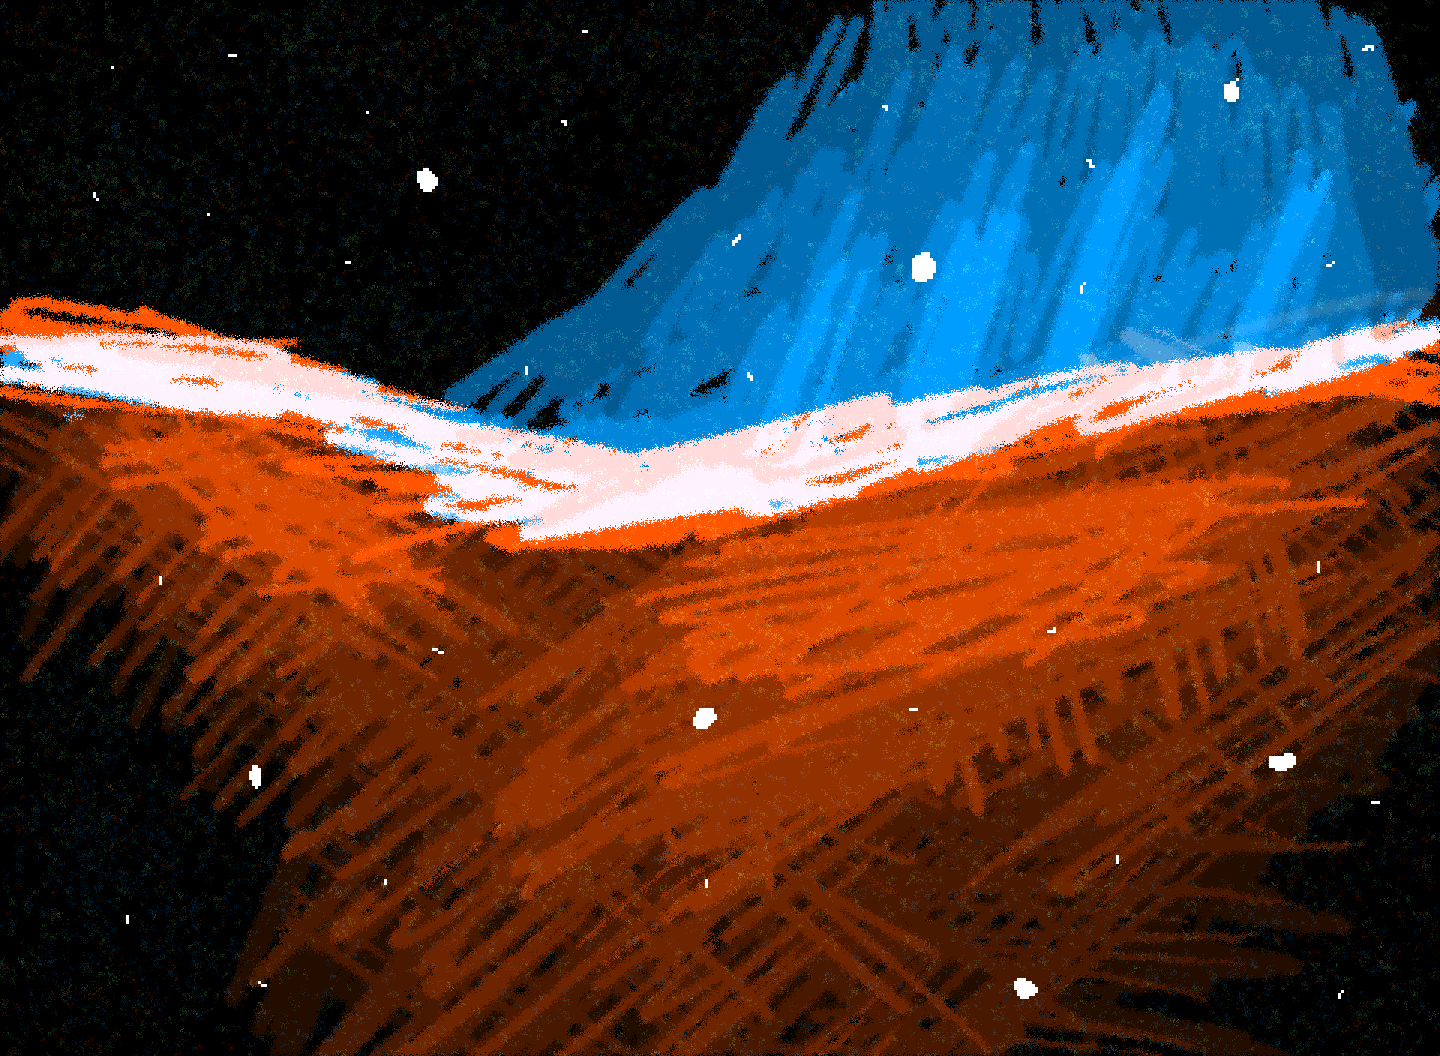 a pixel art rendition of the cosmic cliffs